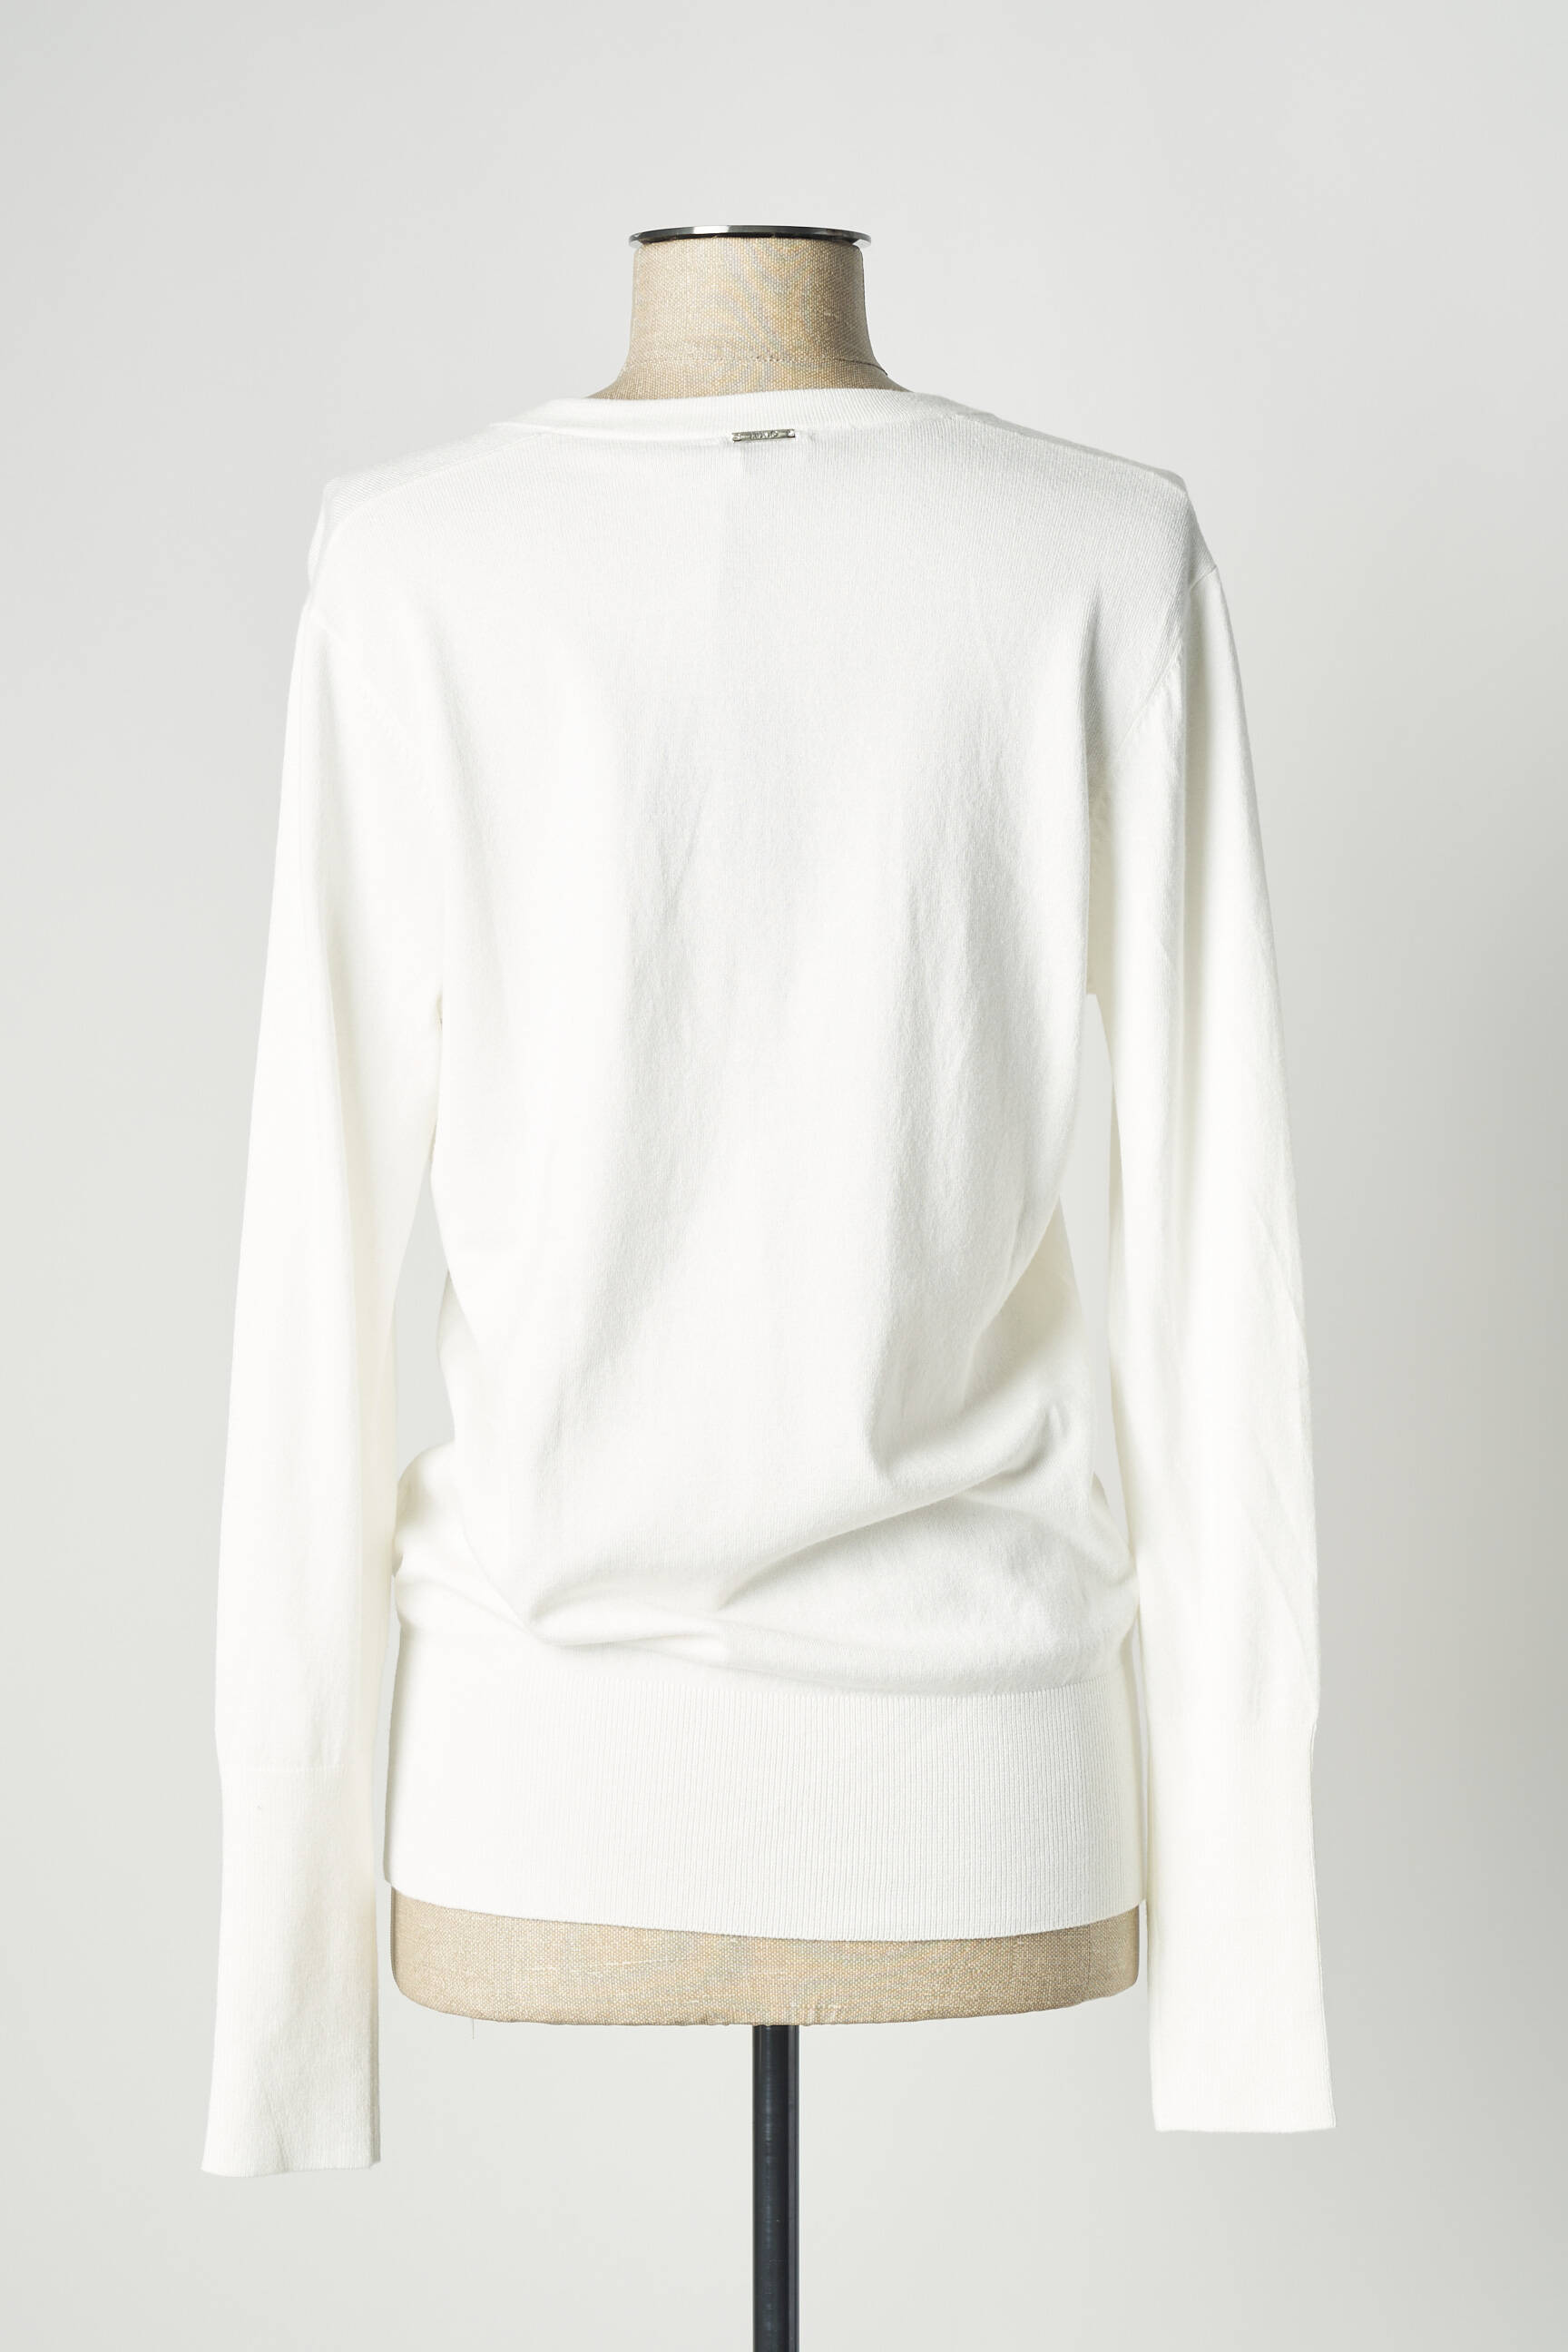 Liu Jo Slip on Femme Textile Blanc 